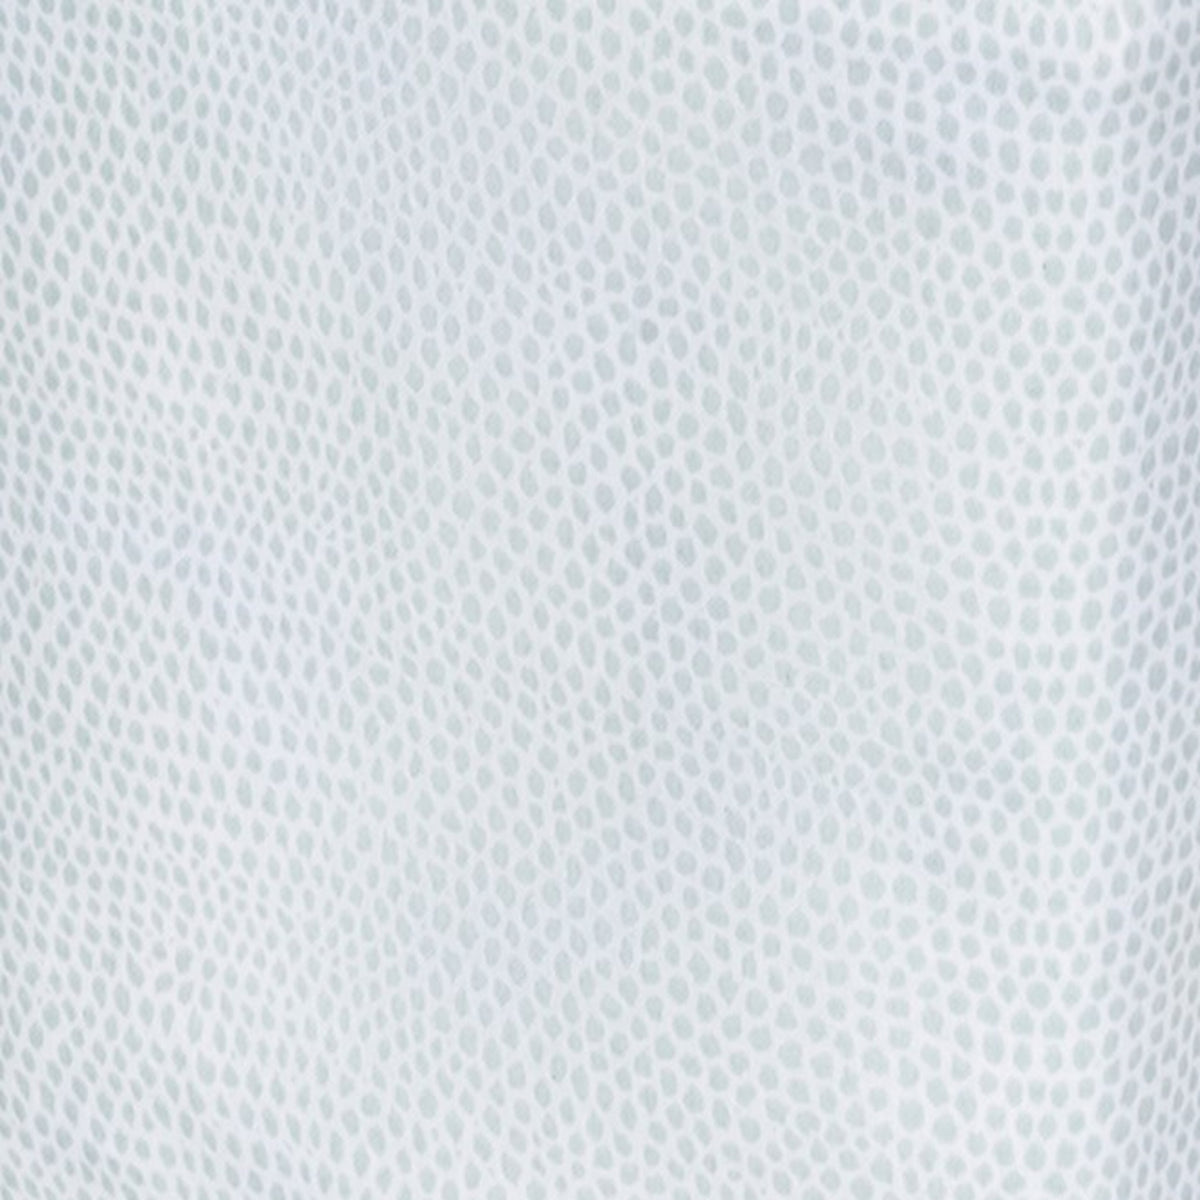 Swatch Sample of Matouk Jasper Tissue Box Cover in Pool Color